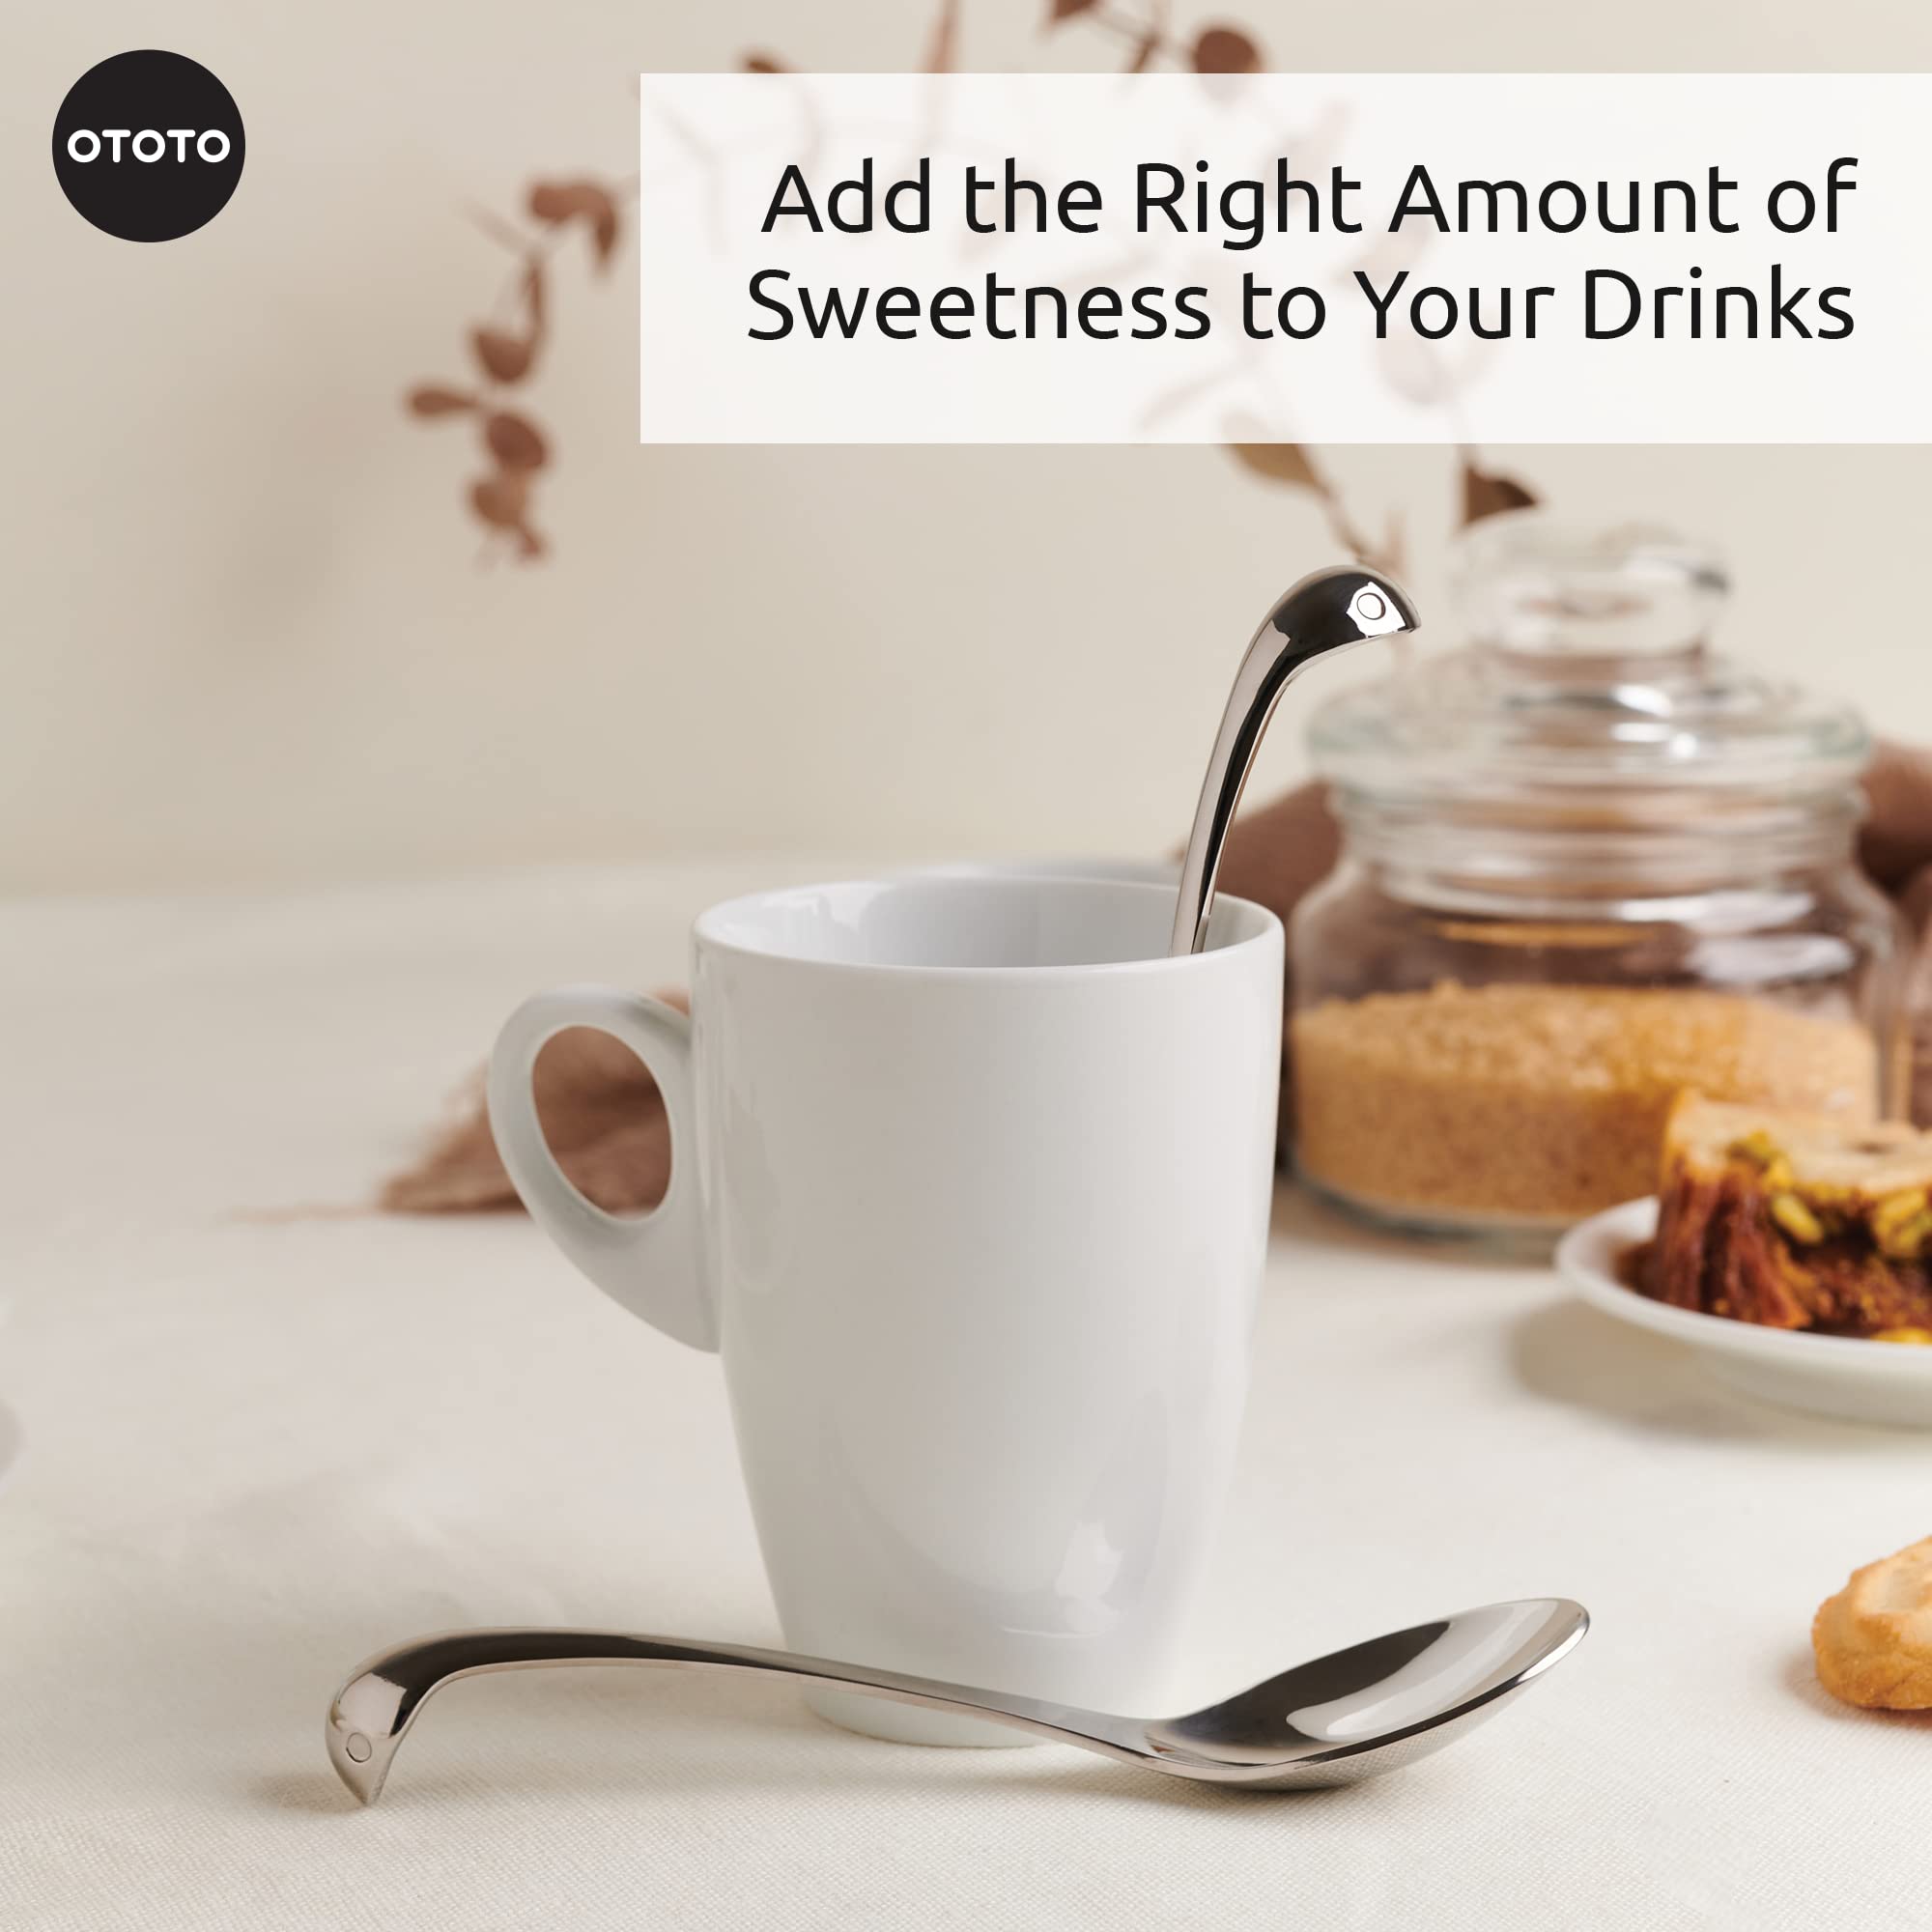 OTOTO Sweet Nessie Sugar Spoon - Stainless Steel Tea Spoon - 100% Food Grade & Dishwasher Safe - Perfect Spoon for Tea & Coffee